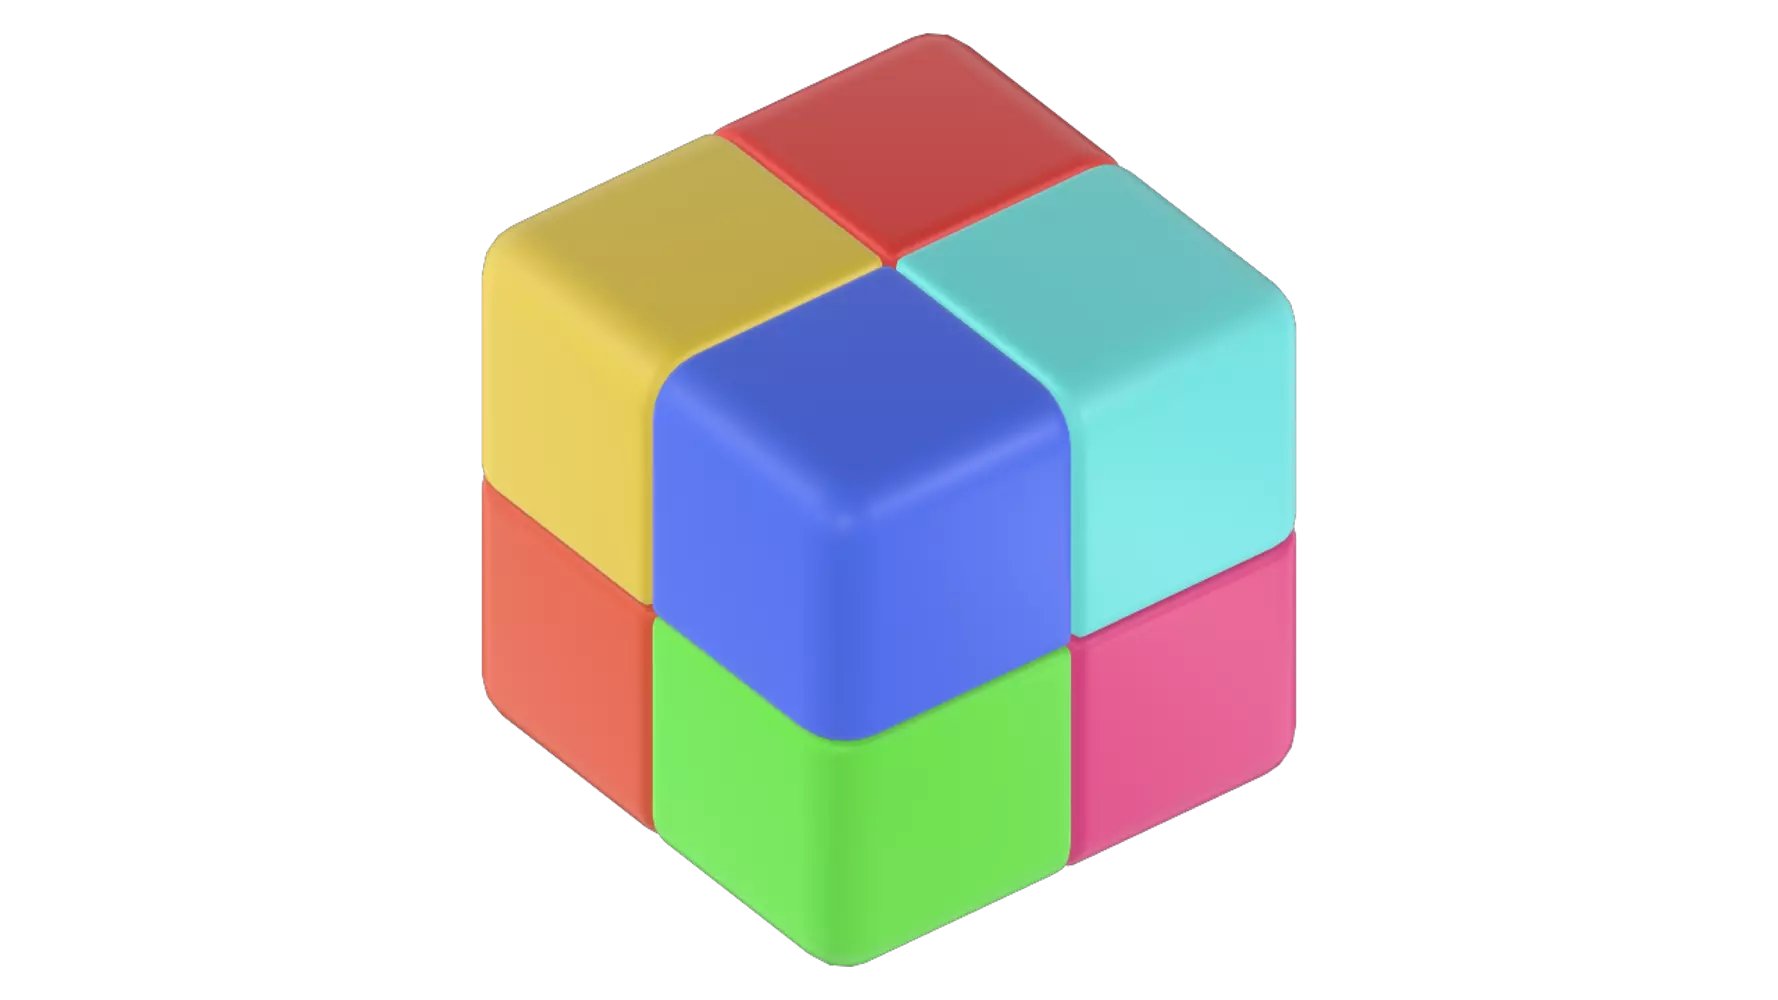 Rubik's Cube 3D Graphic